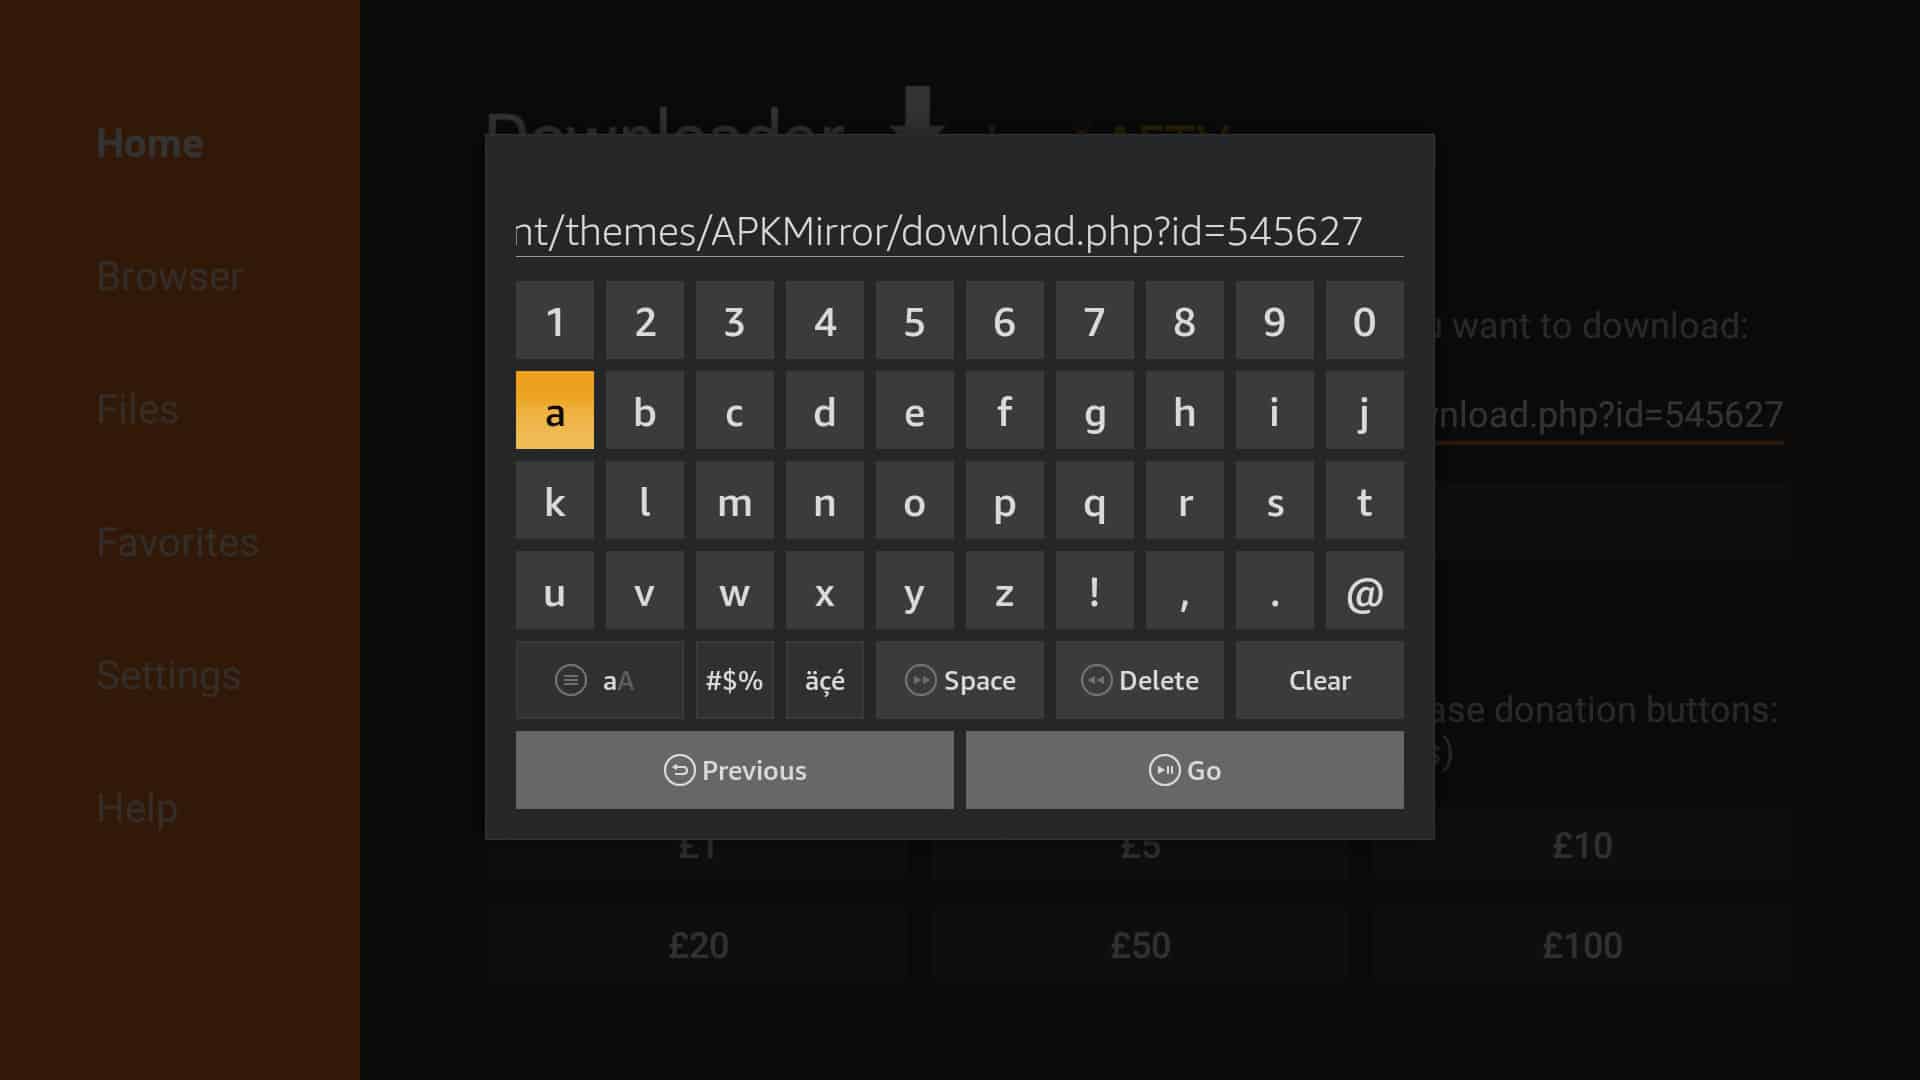 Inserimento del link MX Player nell'app Downloader